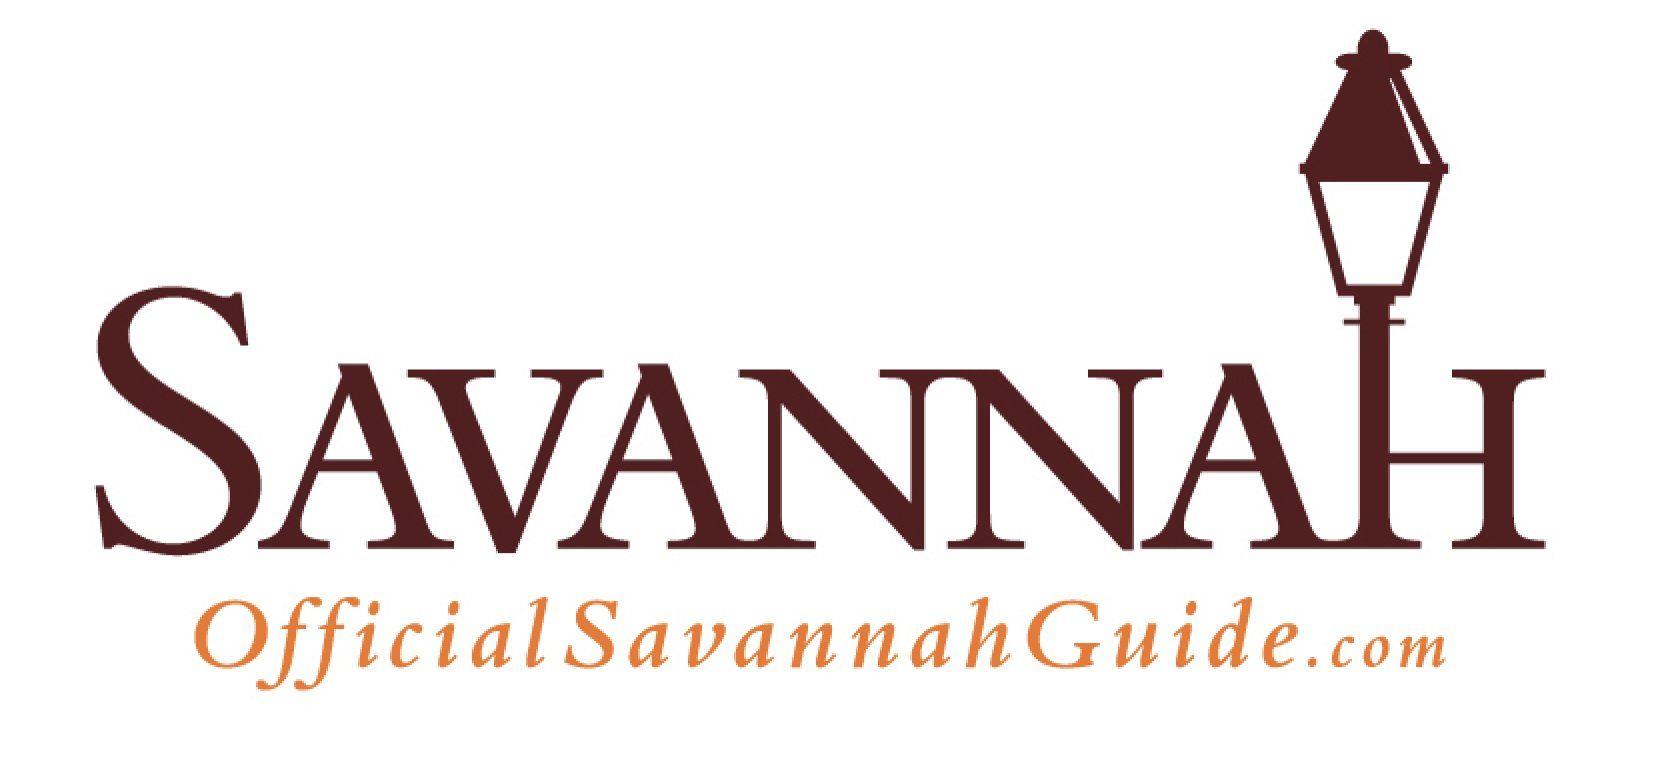 savannah georgia tourist attractions